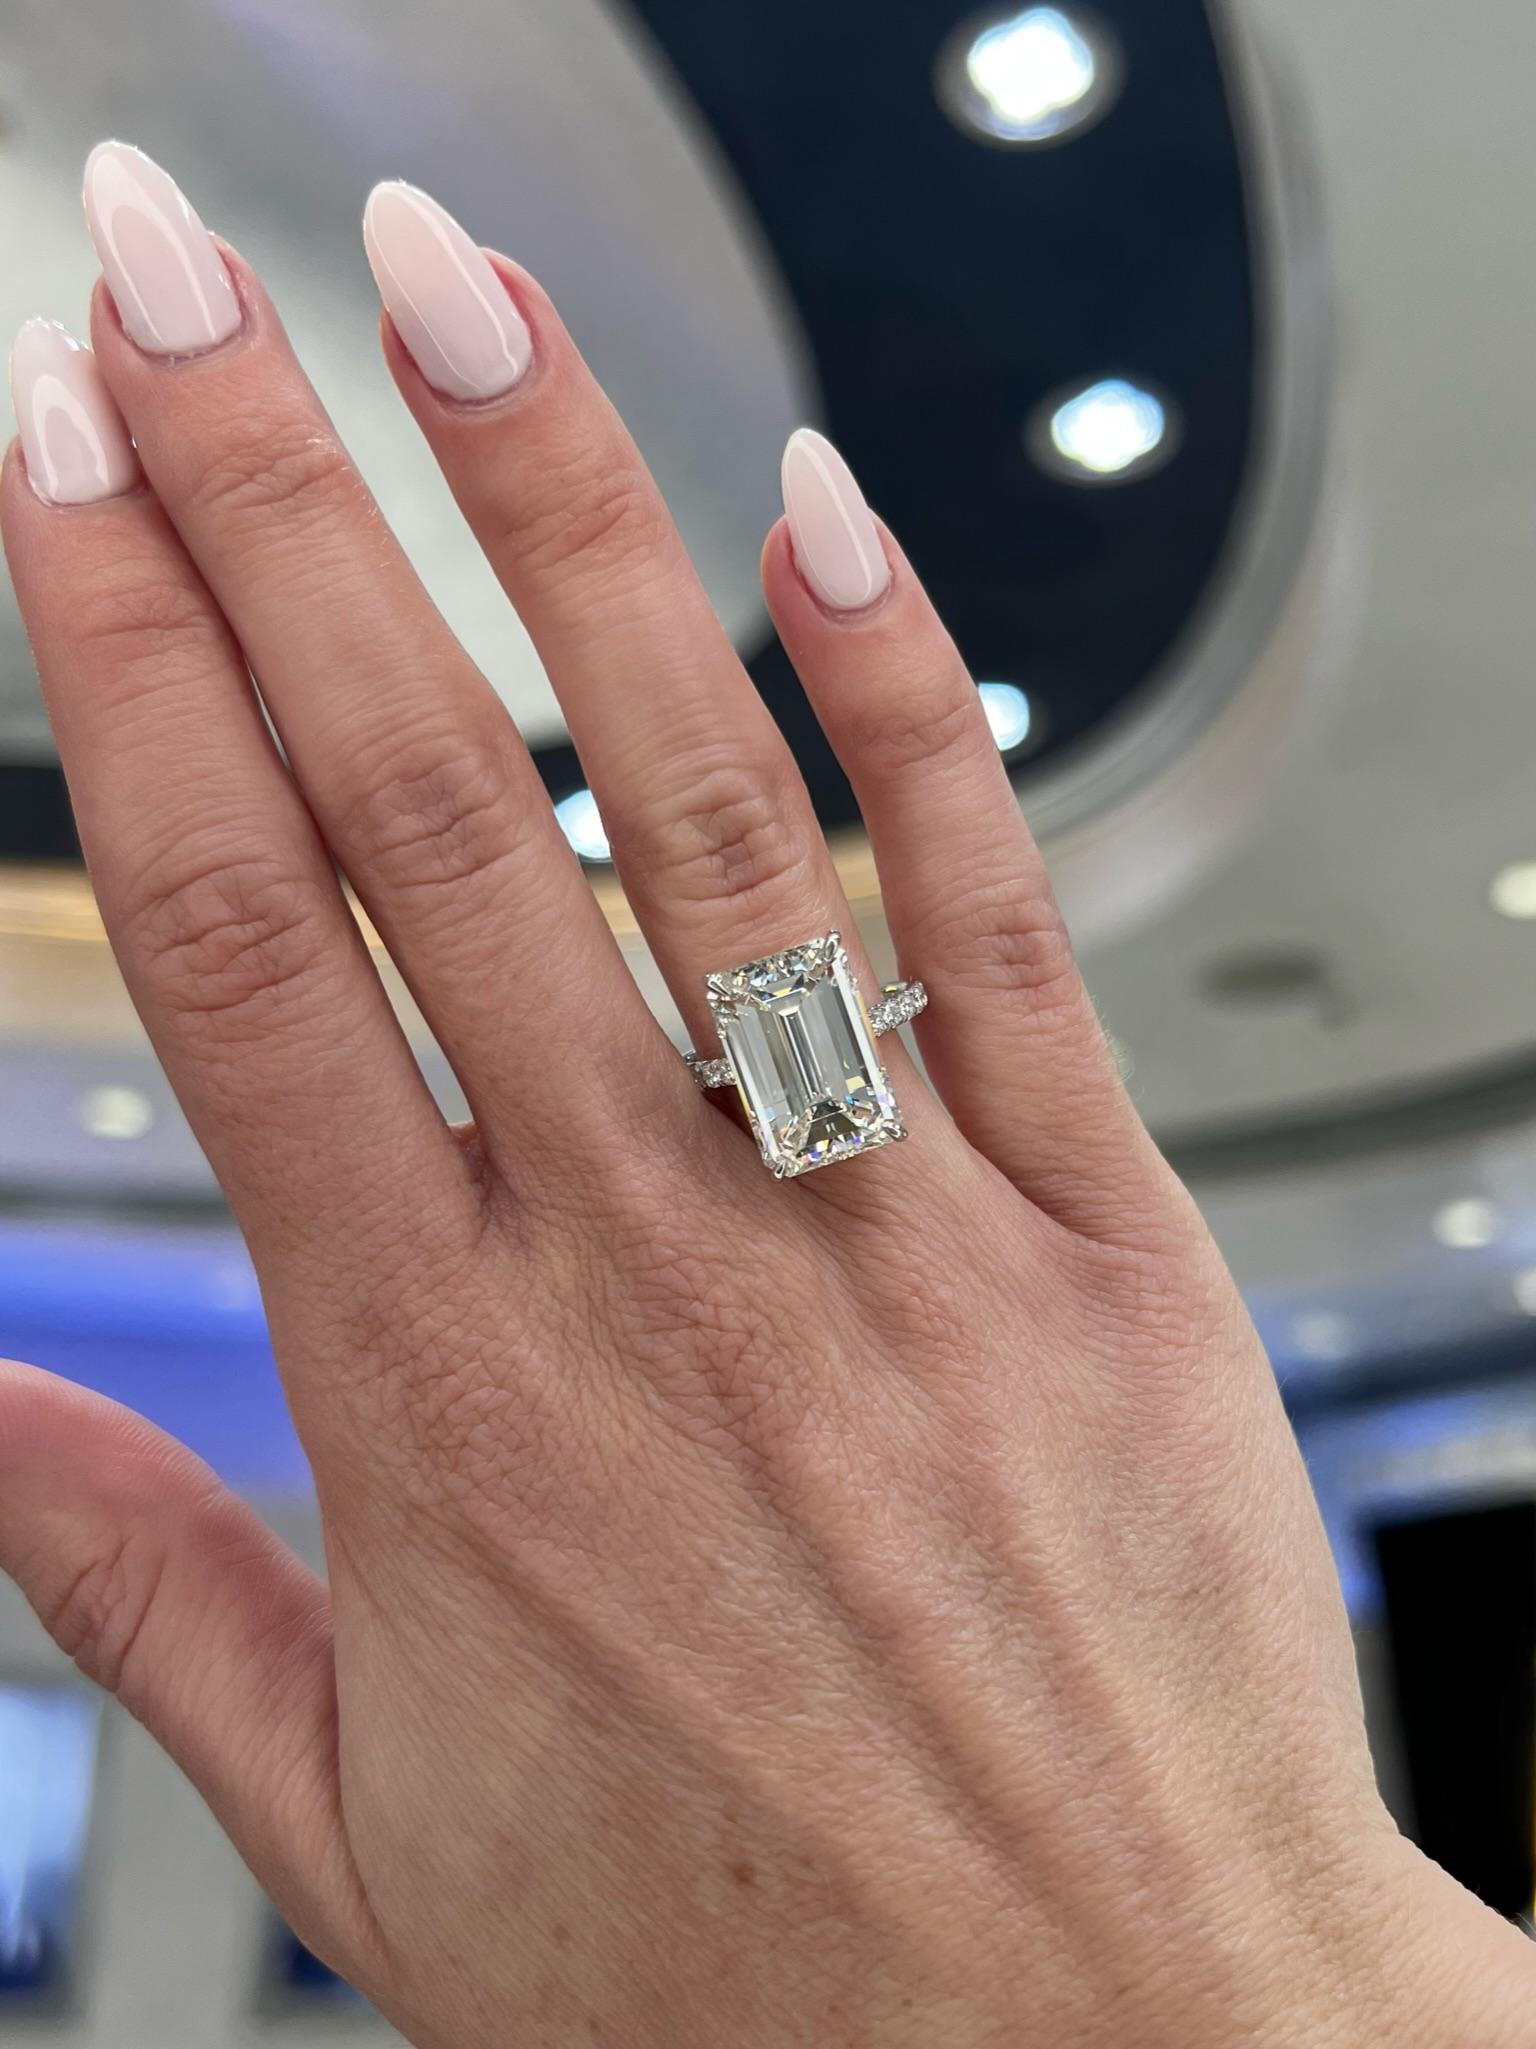 David Rosenberg 10.86 Carat Emerald Cut I VS2 GIA Diamond Engagement Ring For Sale 5